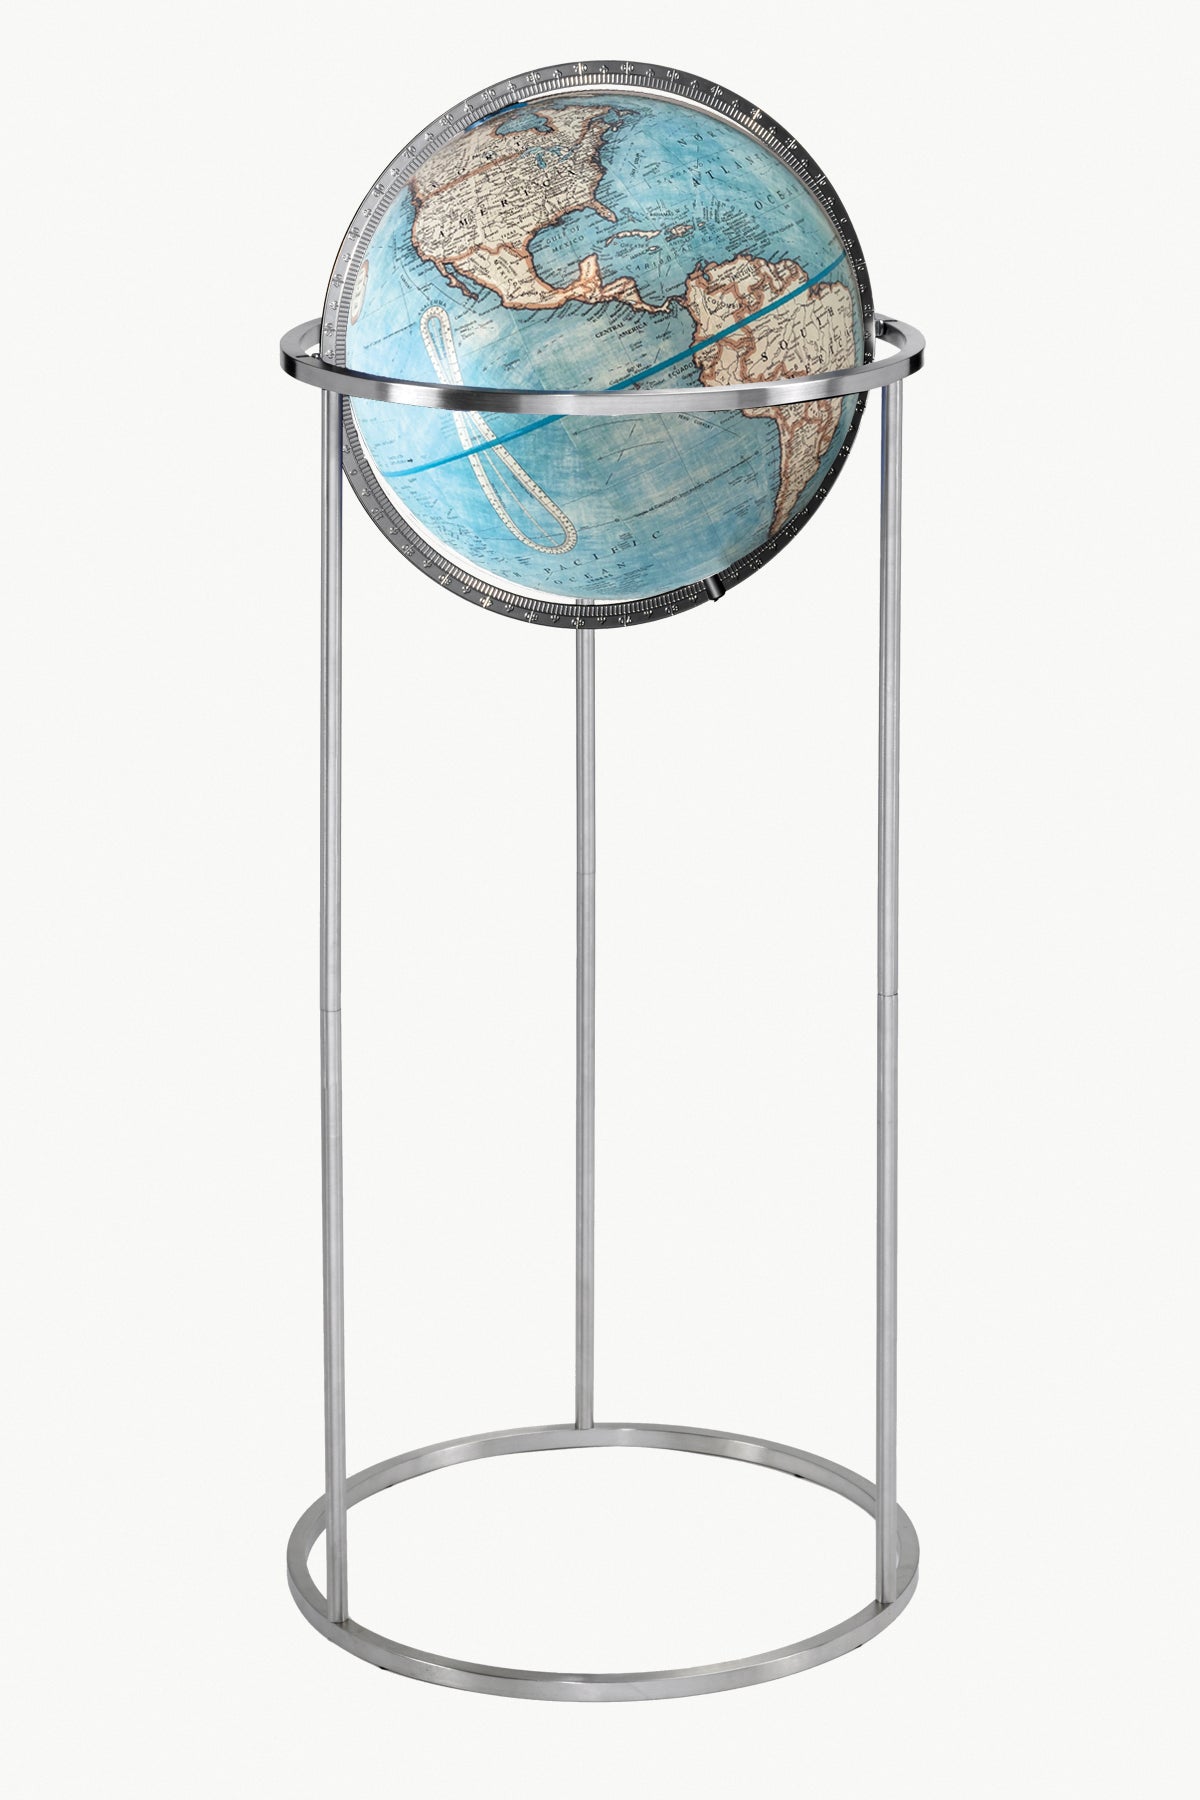 Bergen 12 Inch Floor World Globe By Replogle Globes